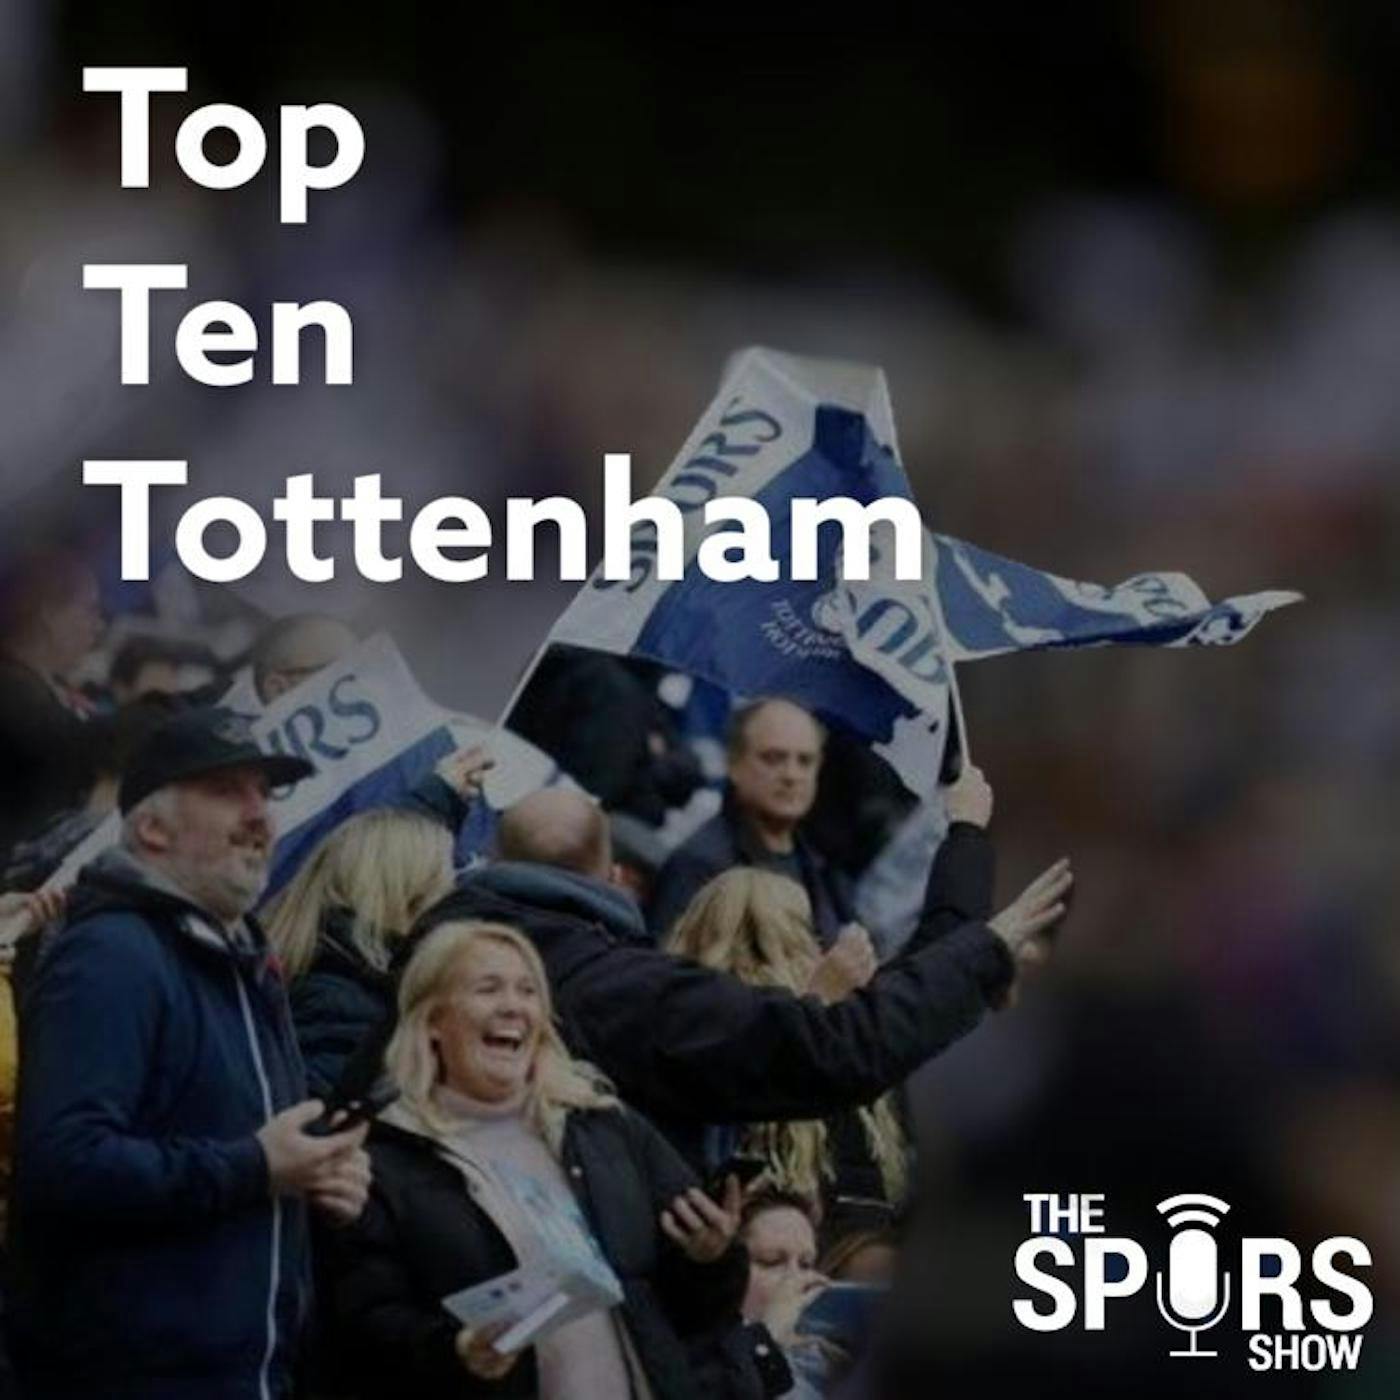 Top Ten Tottenham S3 E15 - Tim Vickery